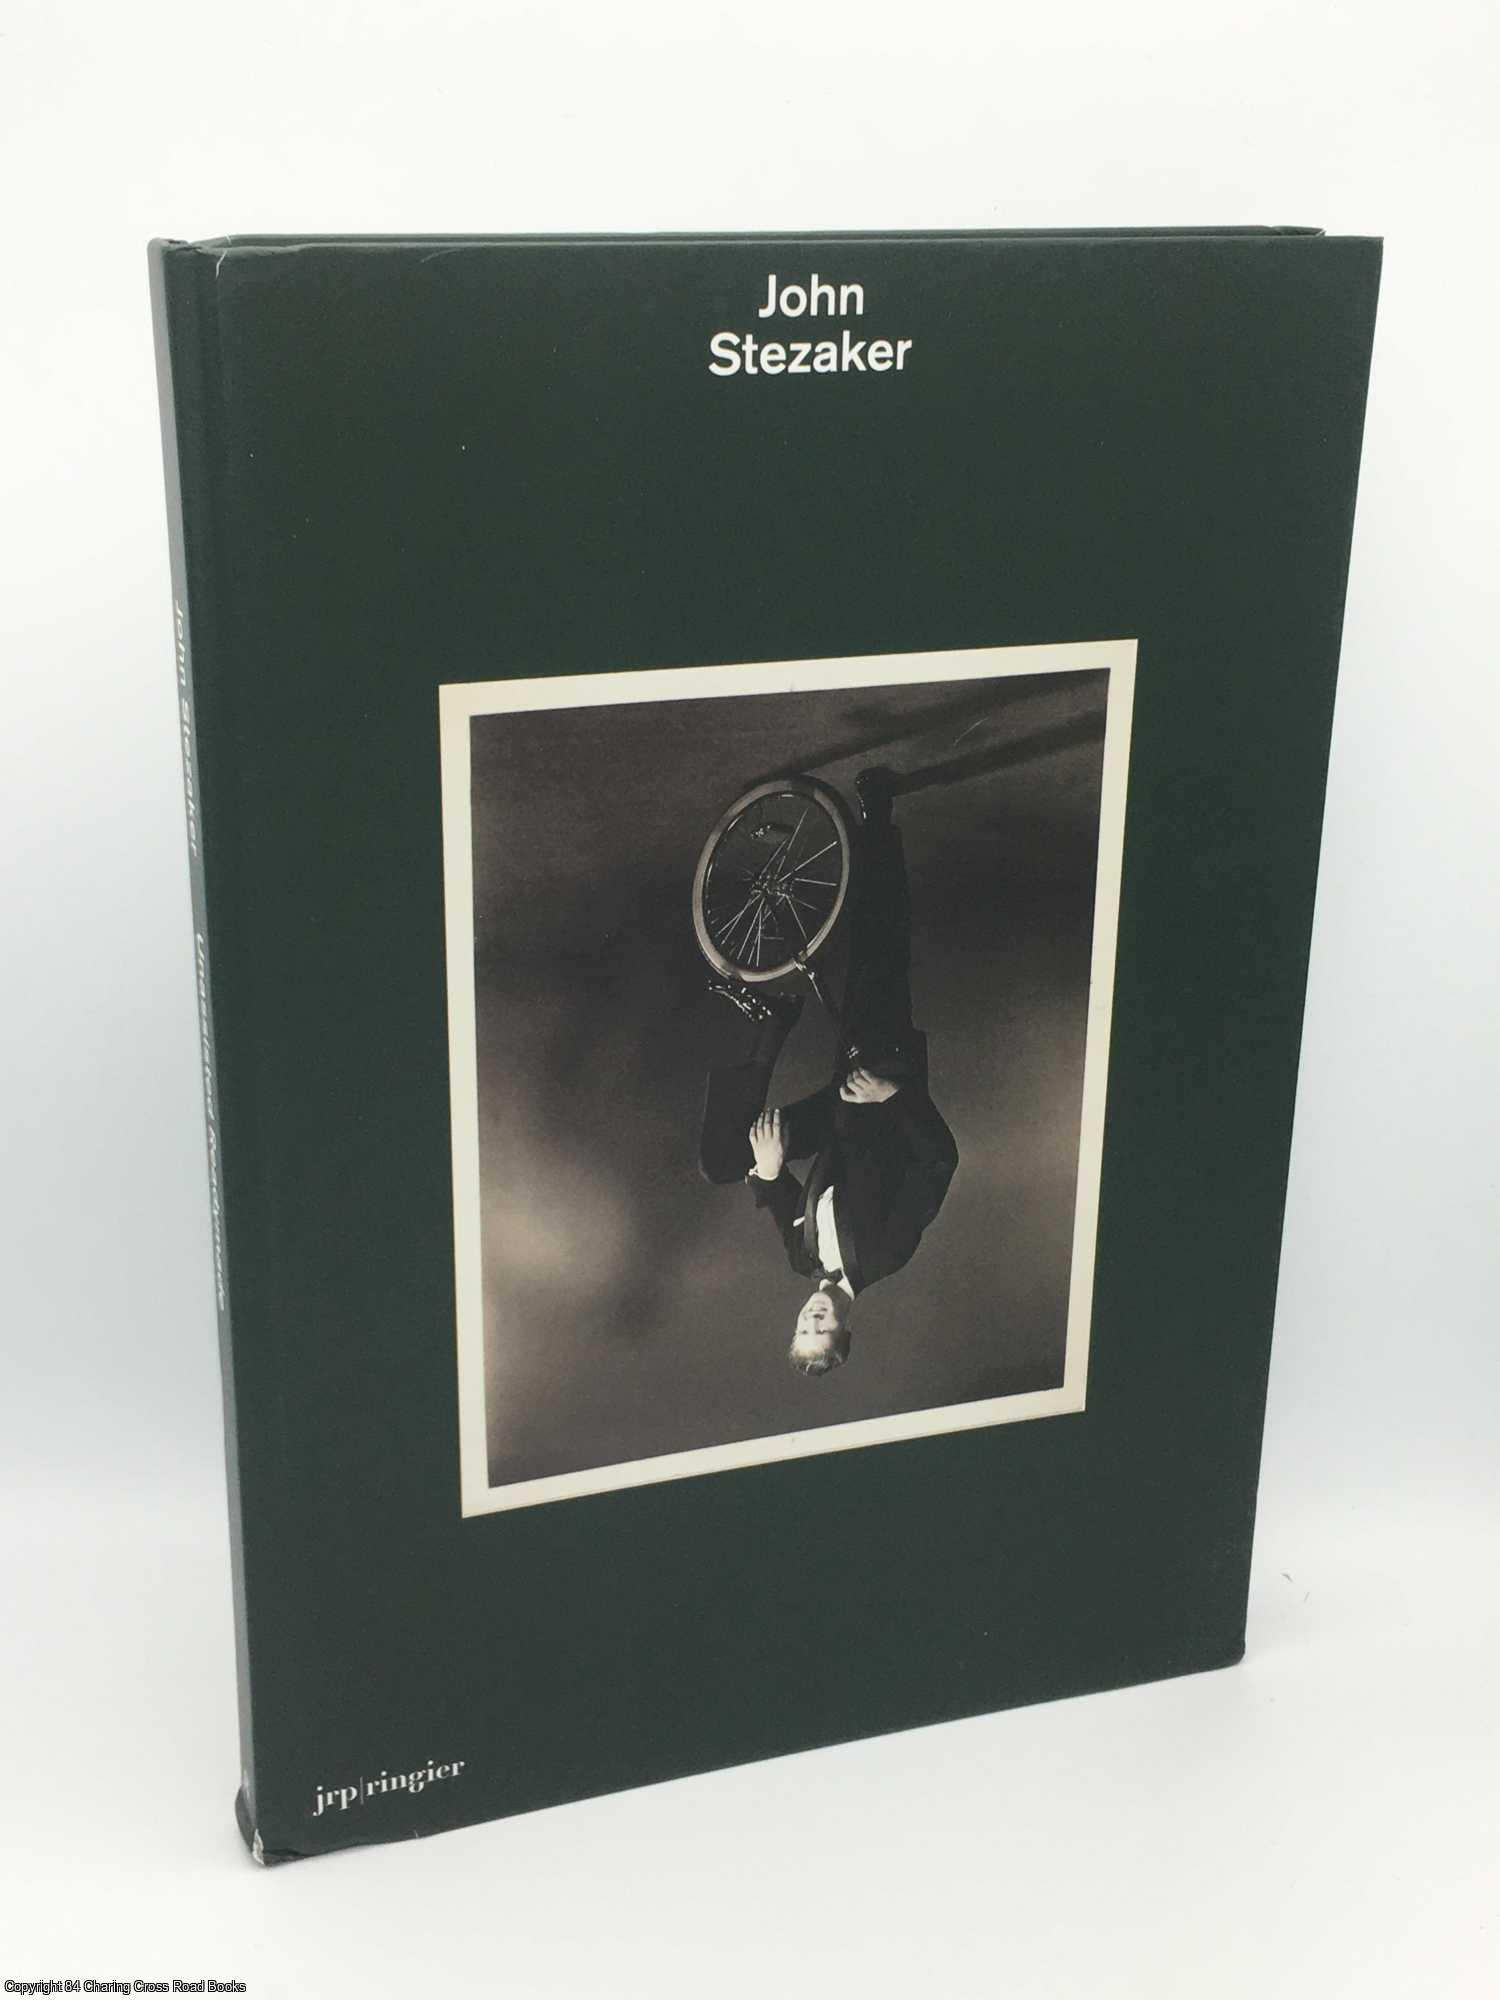 Stezaker, John - John Stezaker: Unassisted Readymade